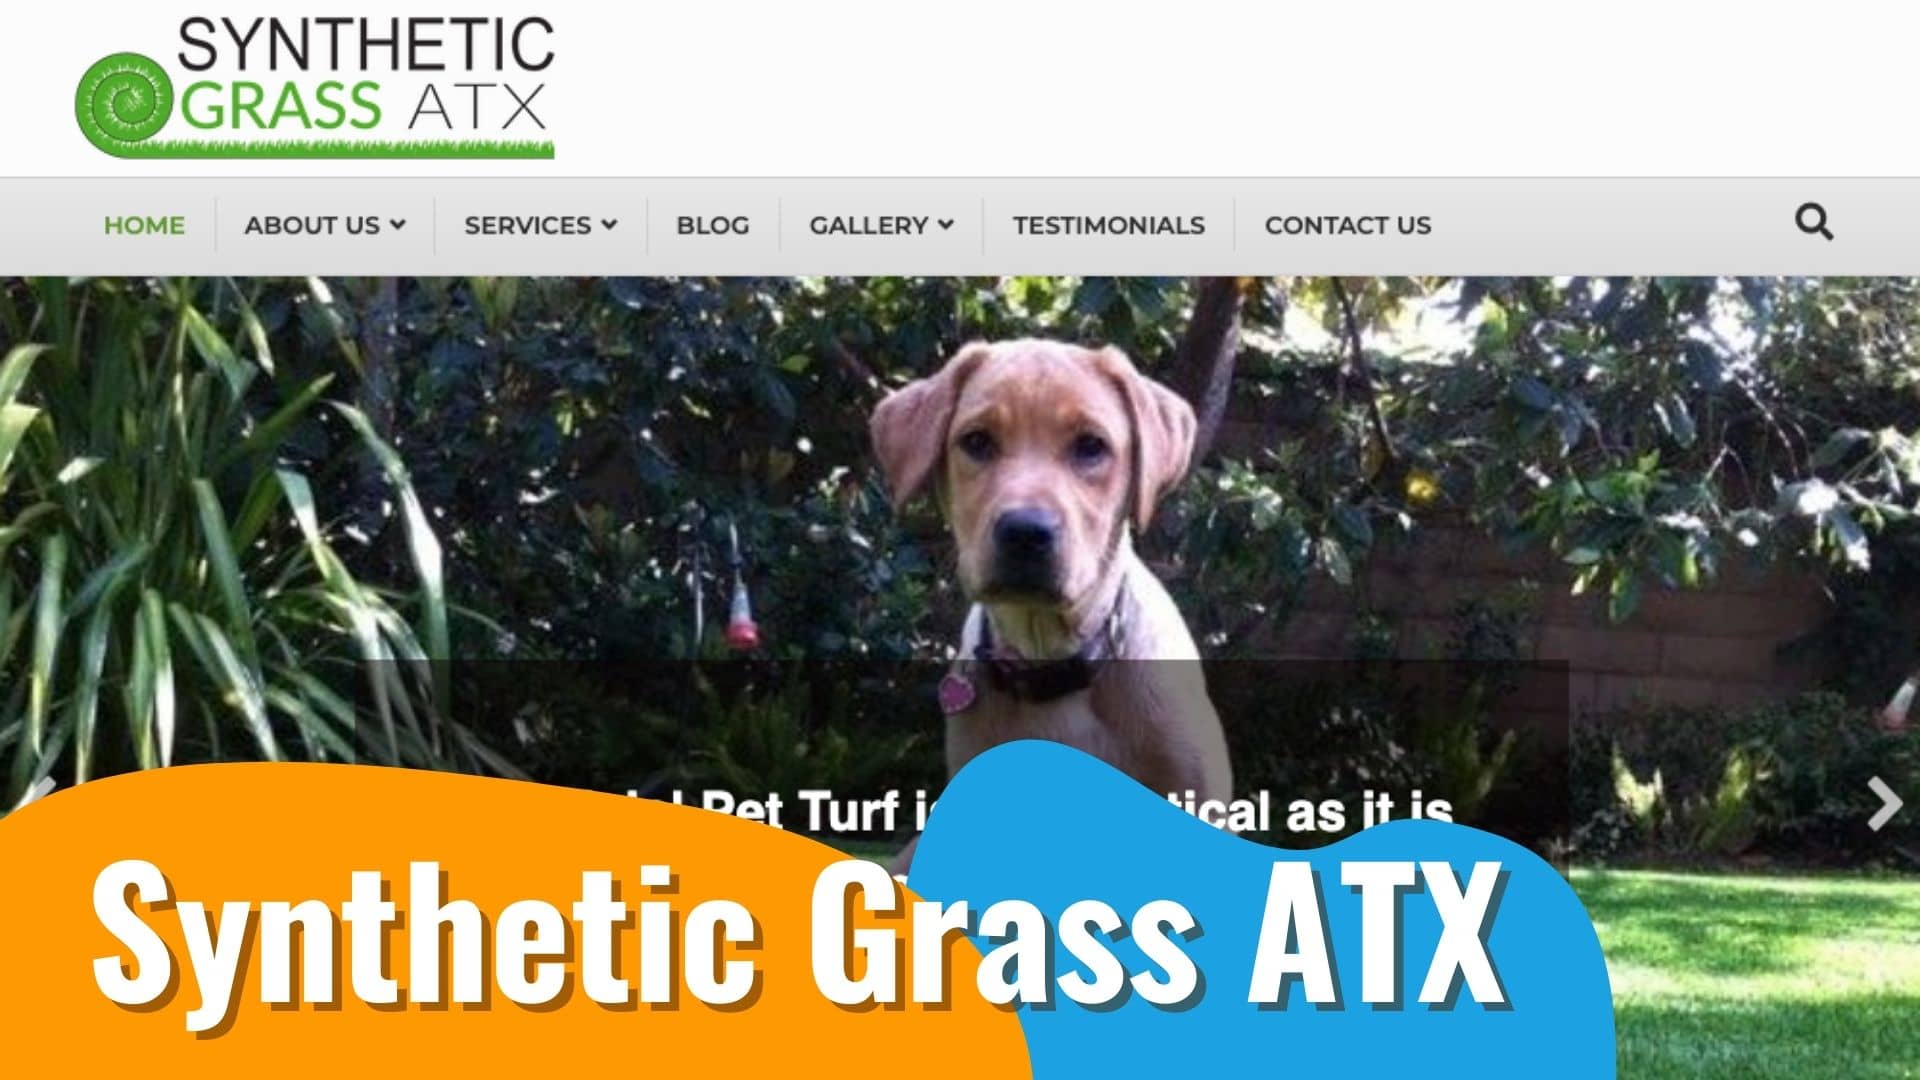 Synthetic Grass ATX Austin